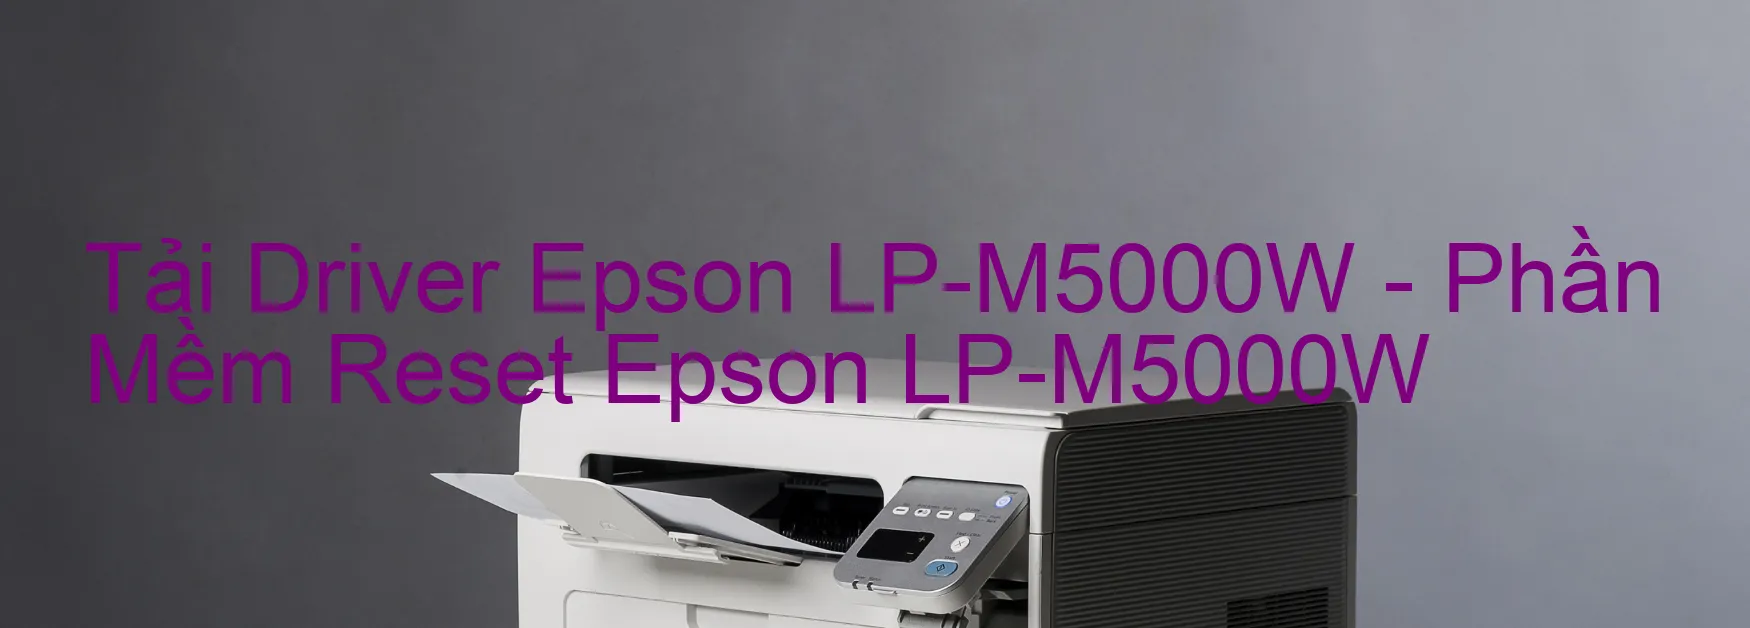 Driver Epson LP-M5000W, Phần Mềm Reset Epson LP-M5000W